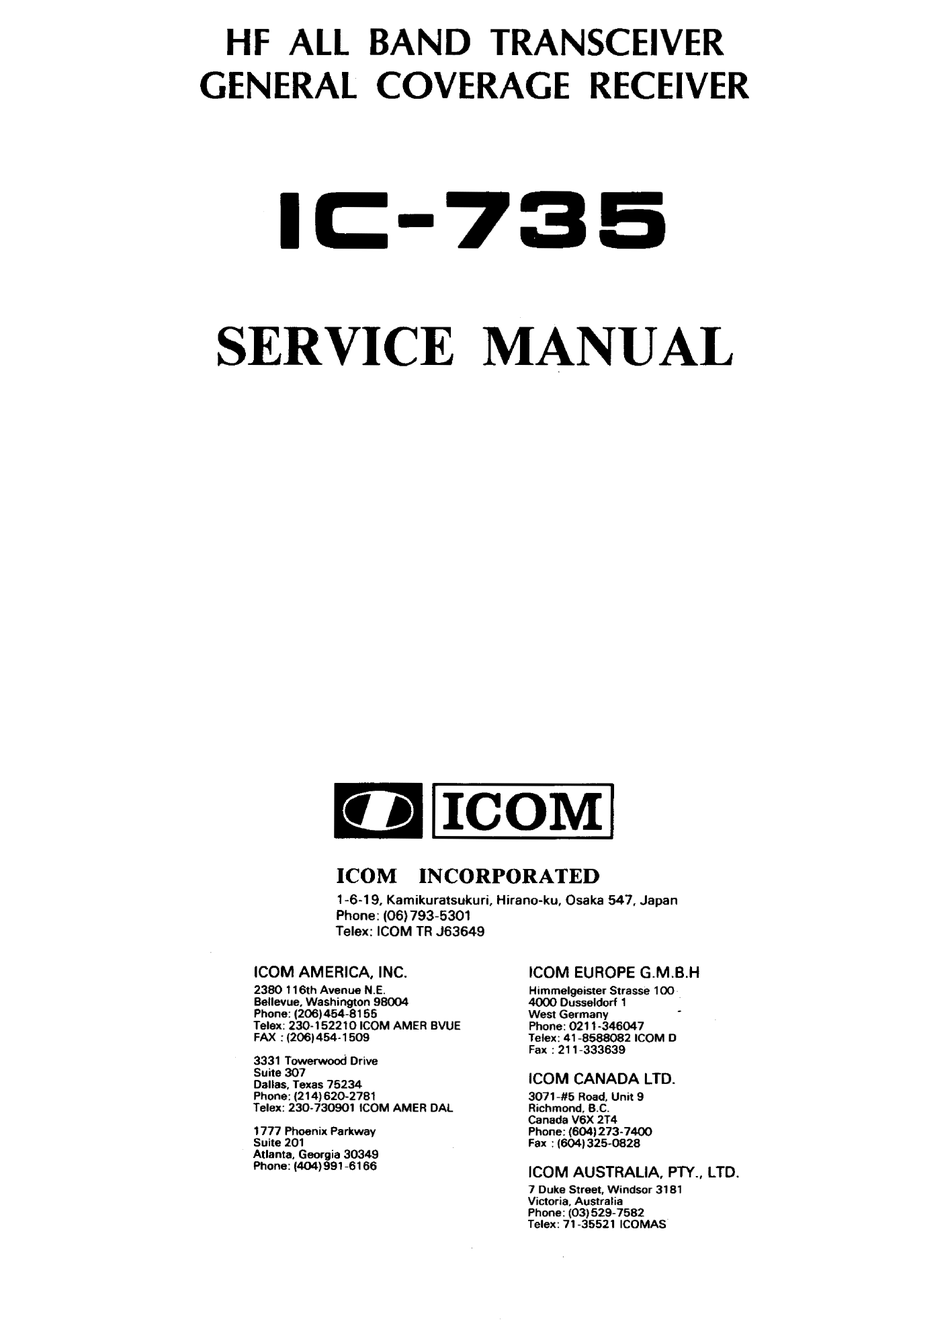 Icom IC-735 Instruction manual Premium Card Stock Covers & 32 LB Paper!